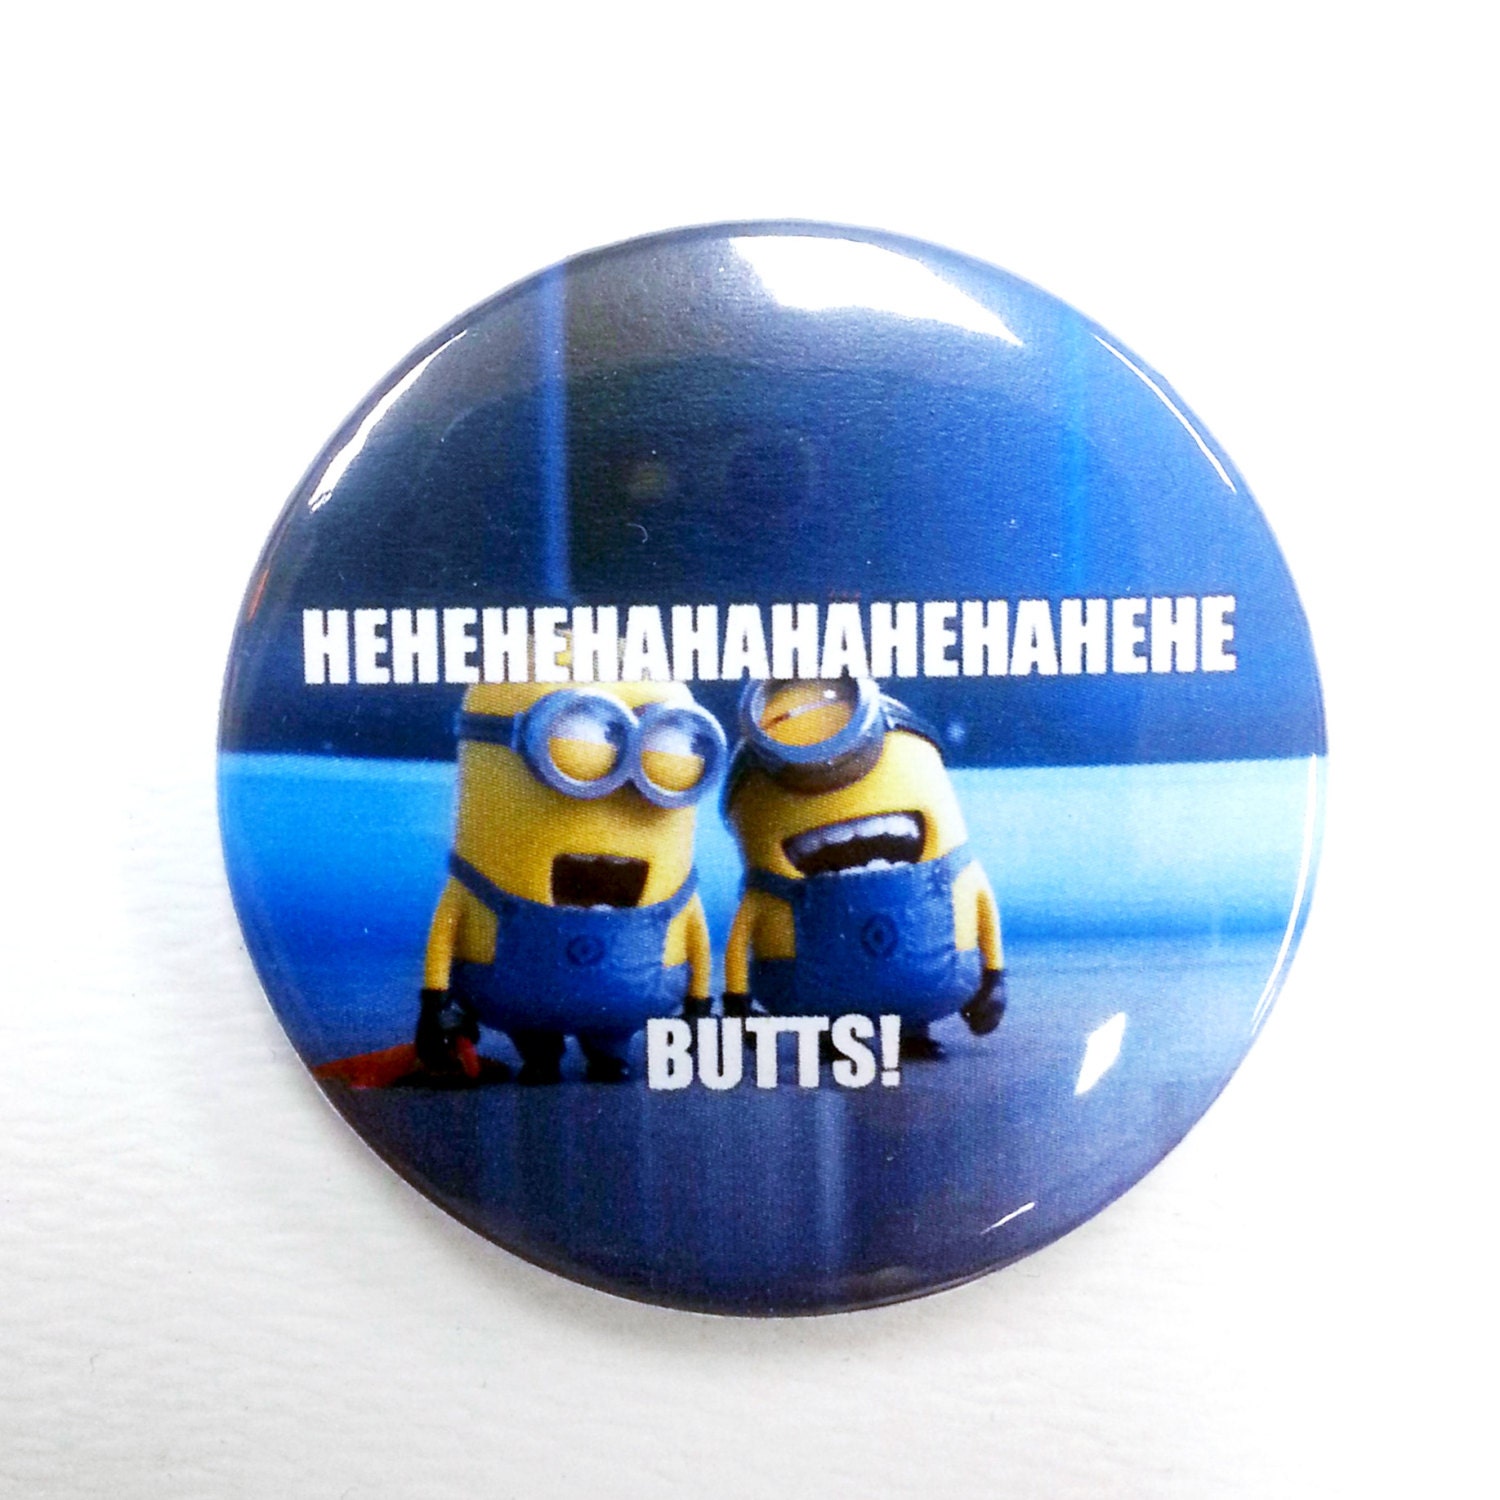 HEHEHEHAHAHA Butts (Despicable me / Minions) meme - 1.75" Badge / Button